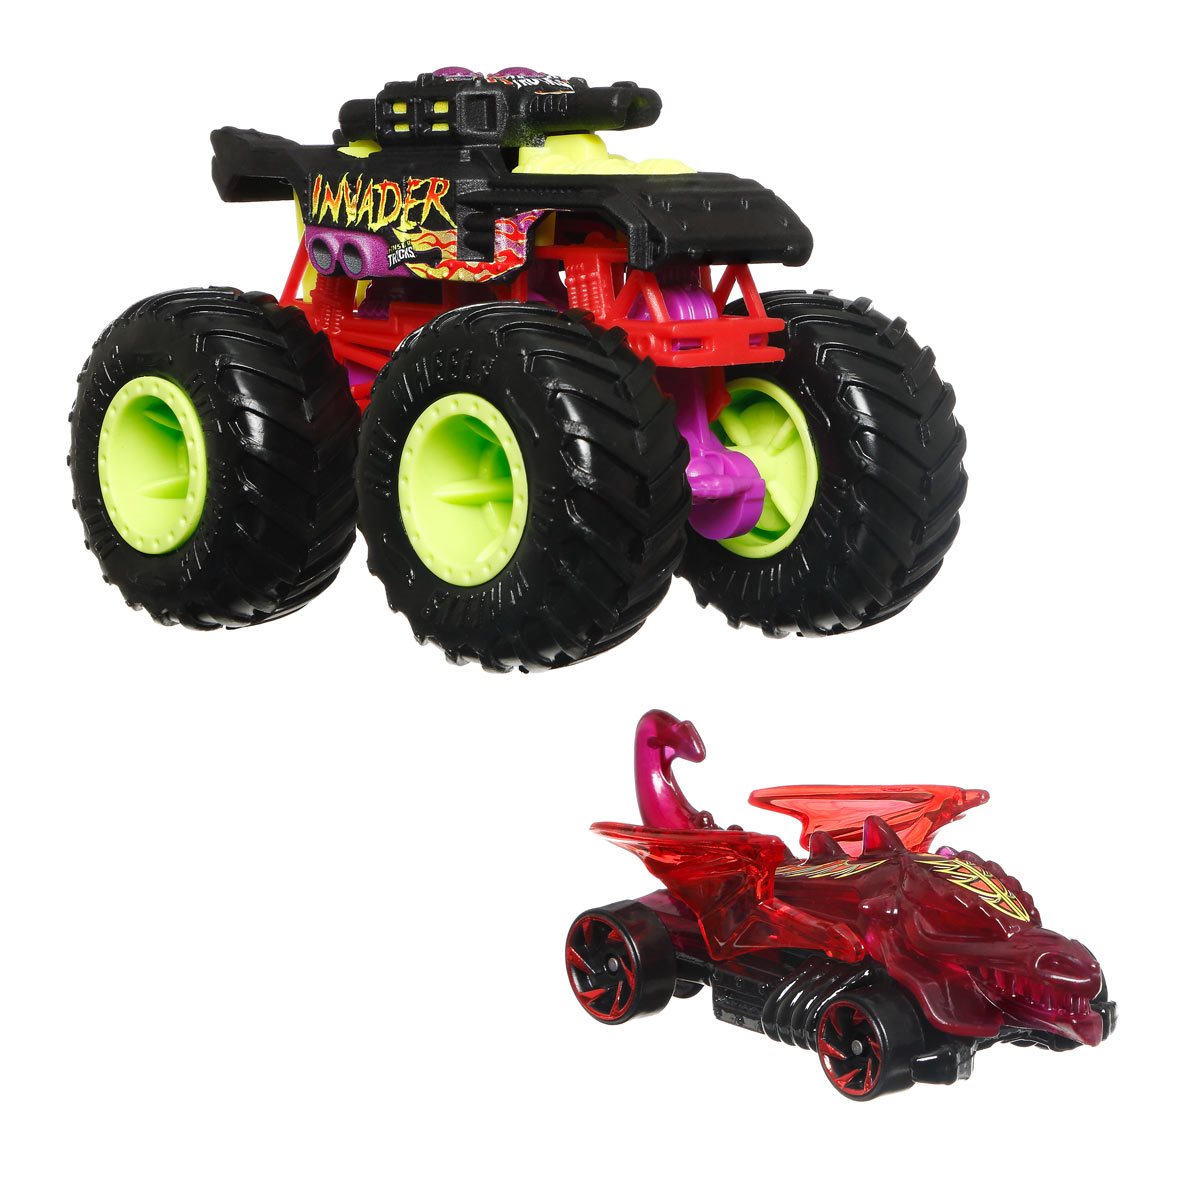 Hot Wheels Monster Trucks - Godzilla - Mattel - Casa Joka